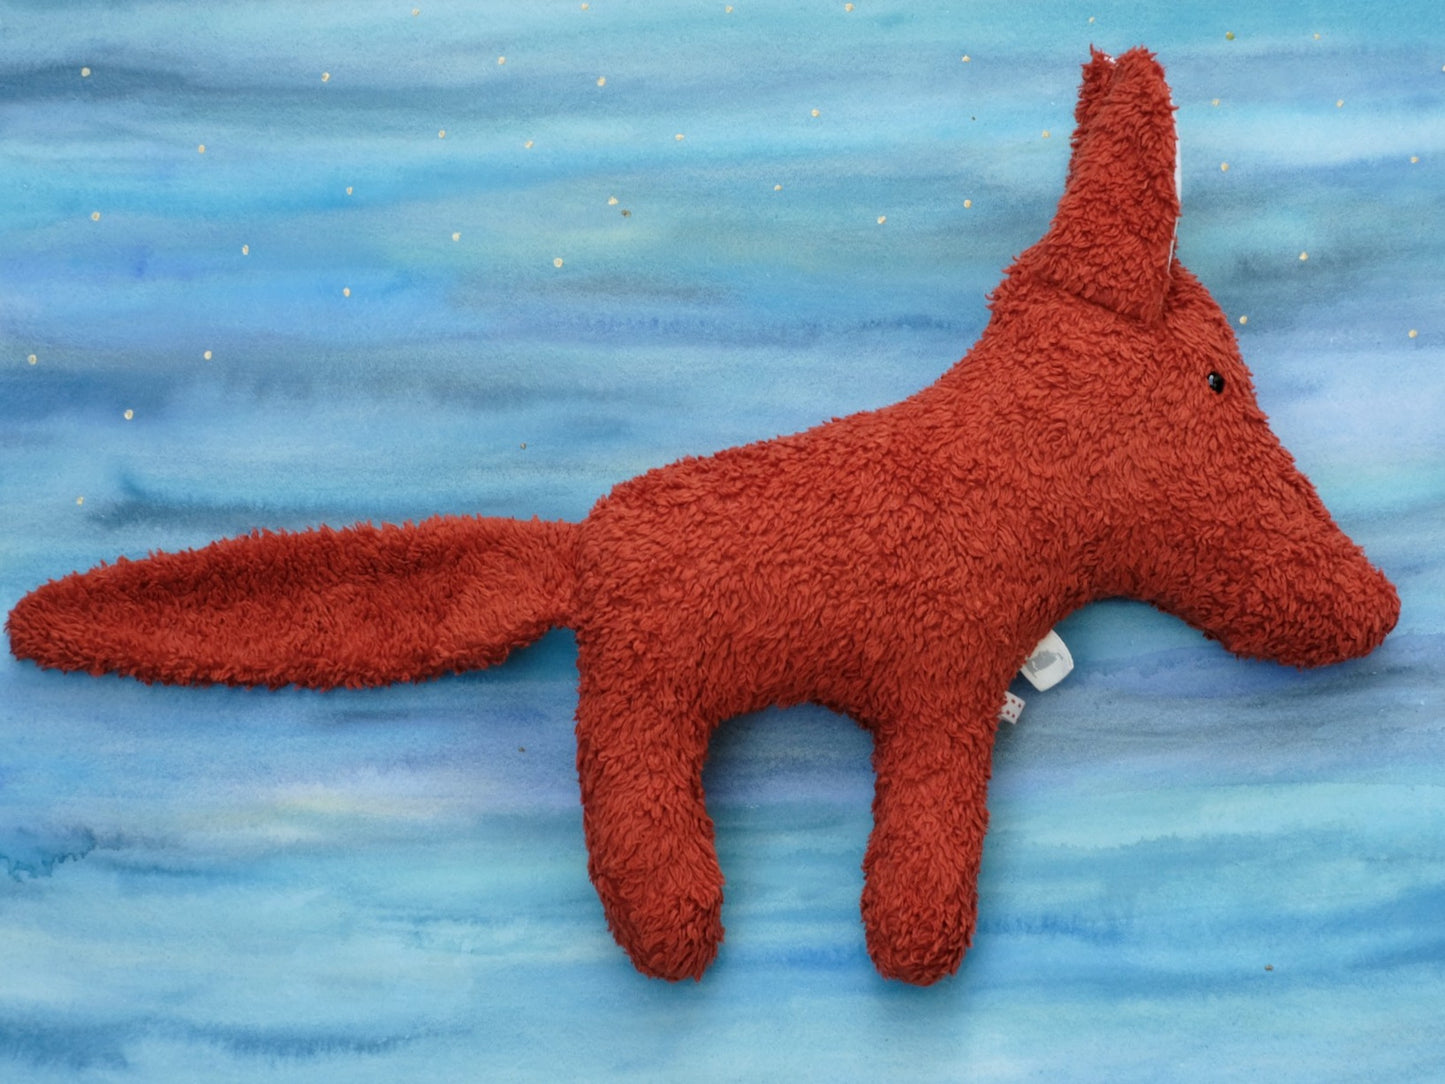 “Lennie” the fox, big in rust red